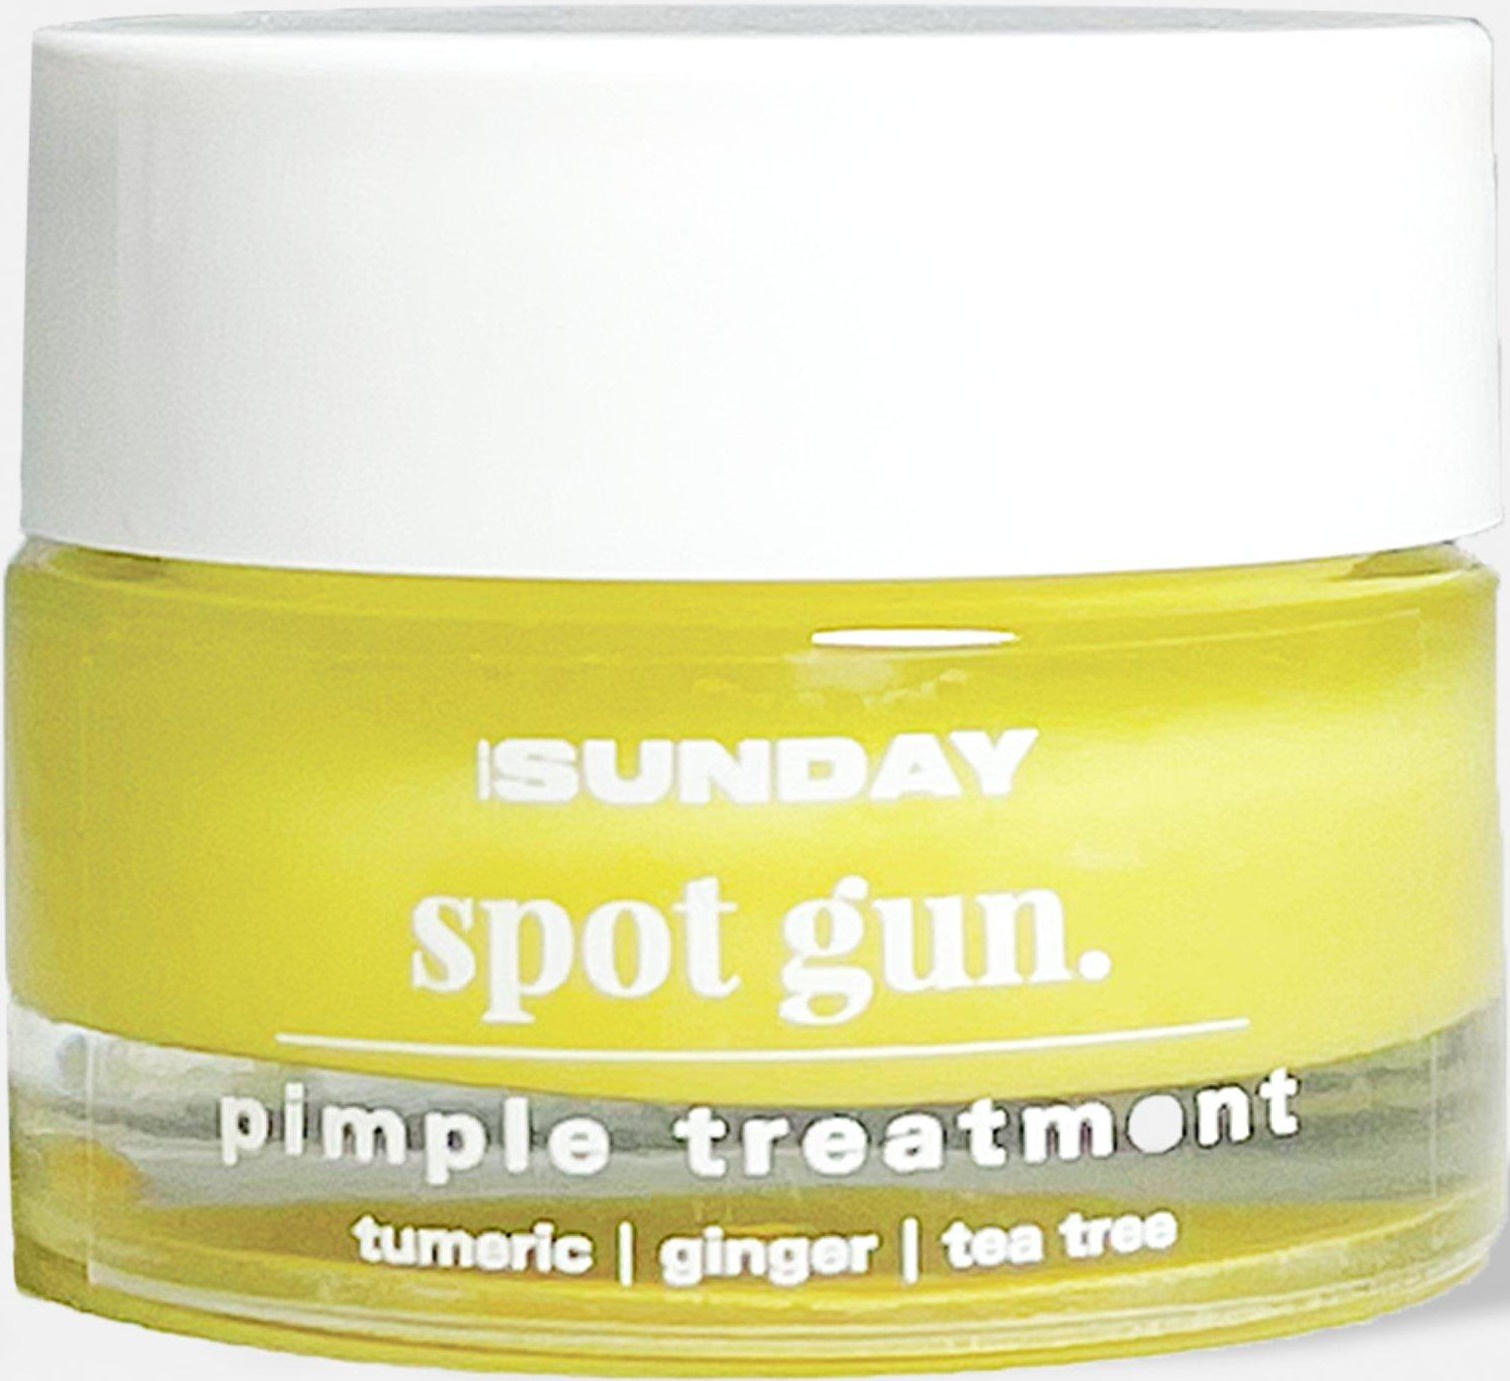 Made by Sunday Spot Gun Pimple treatment